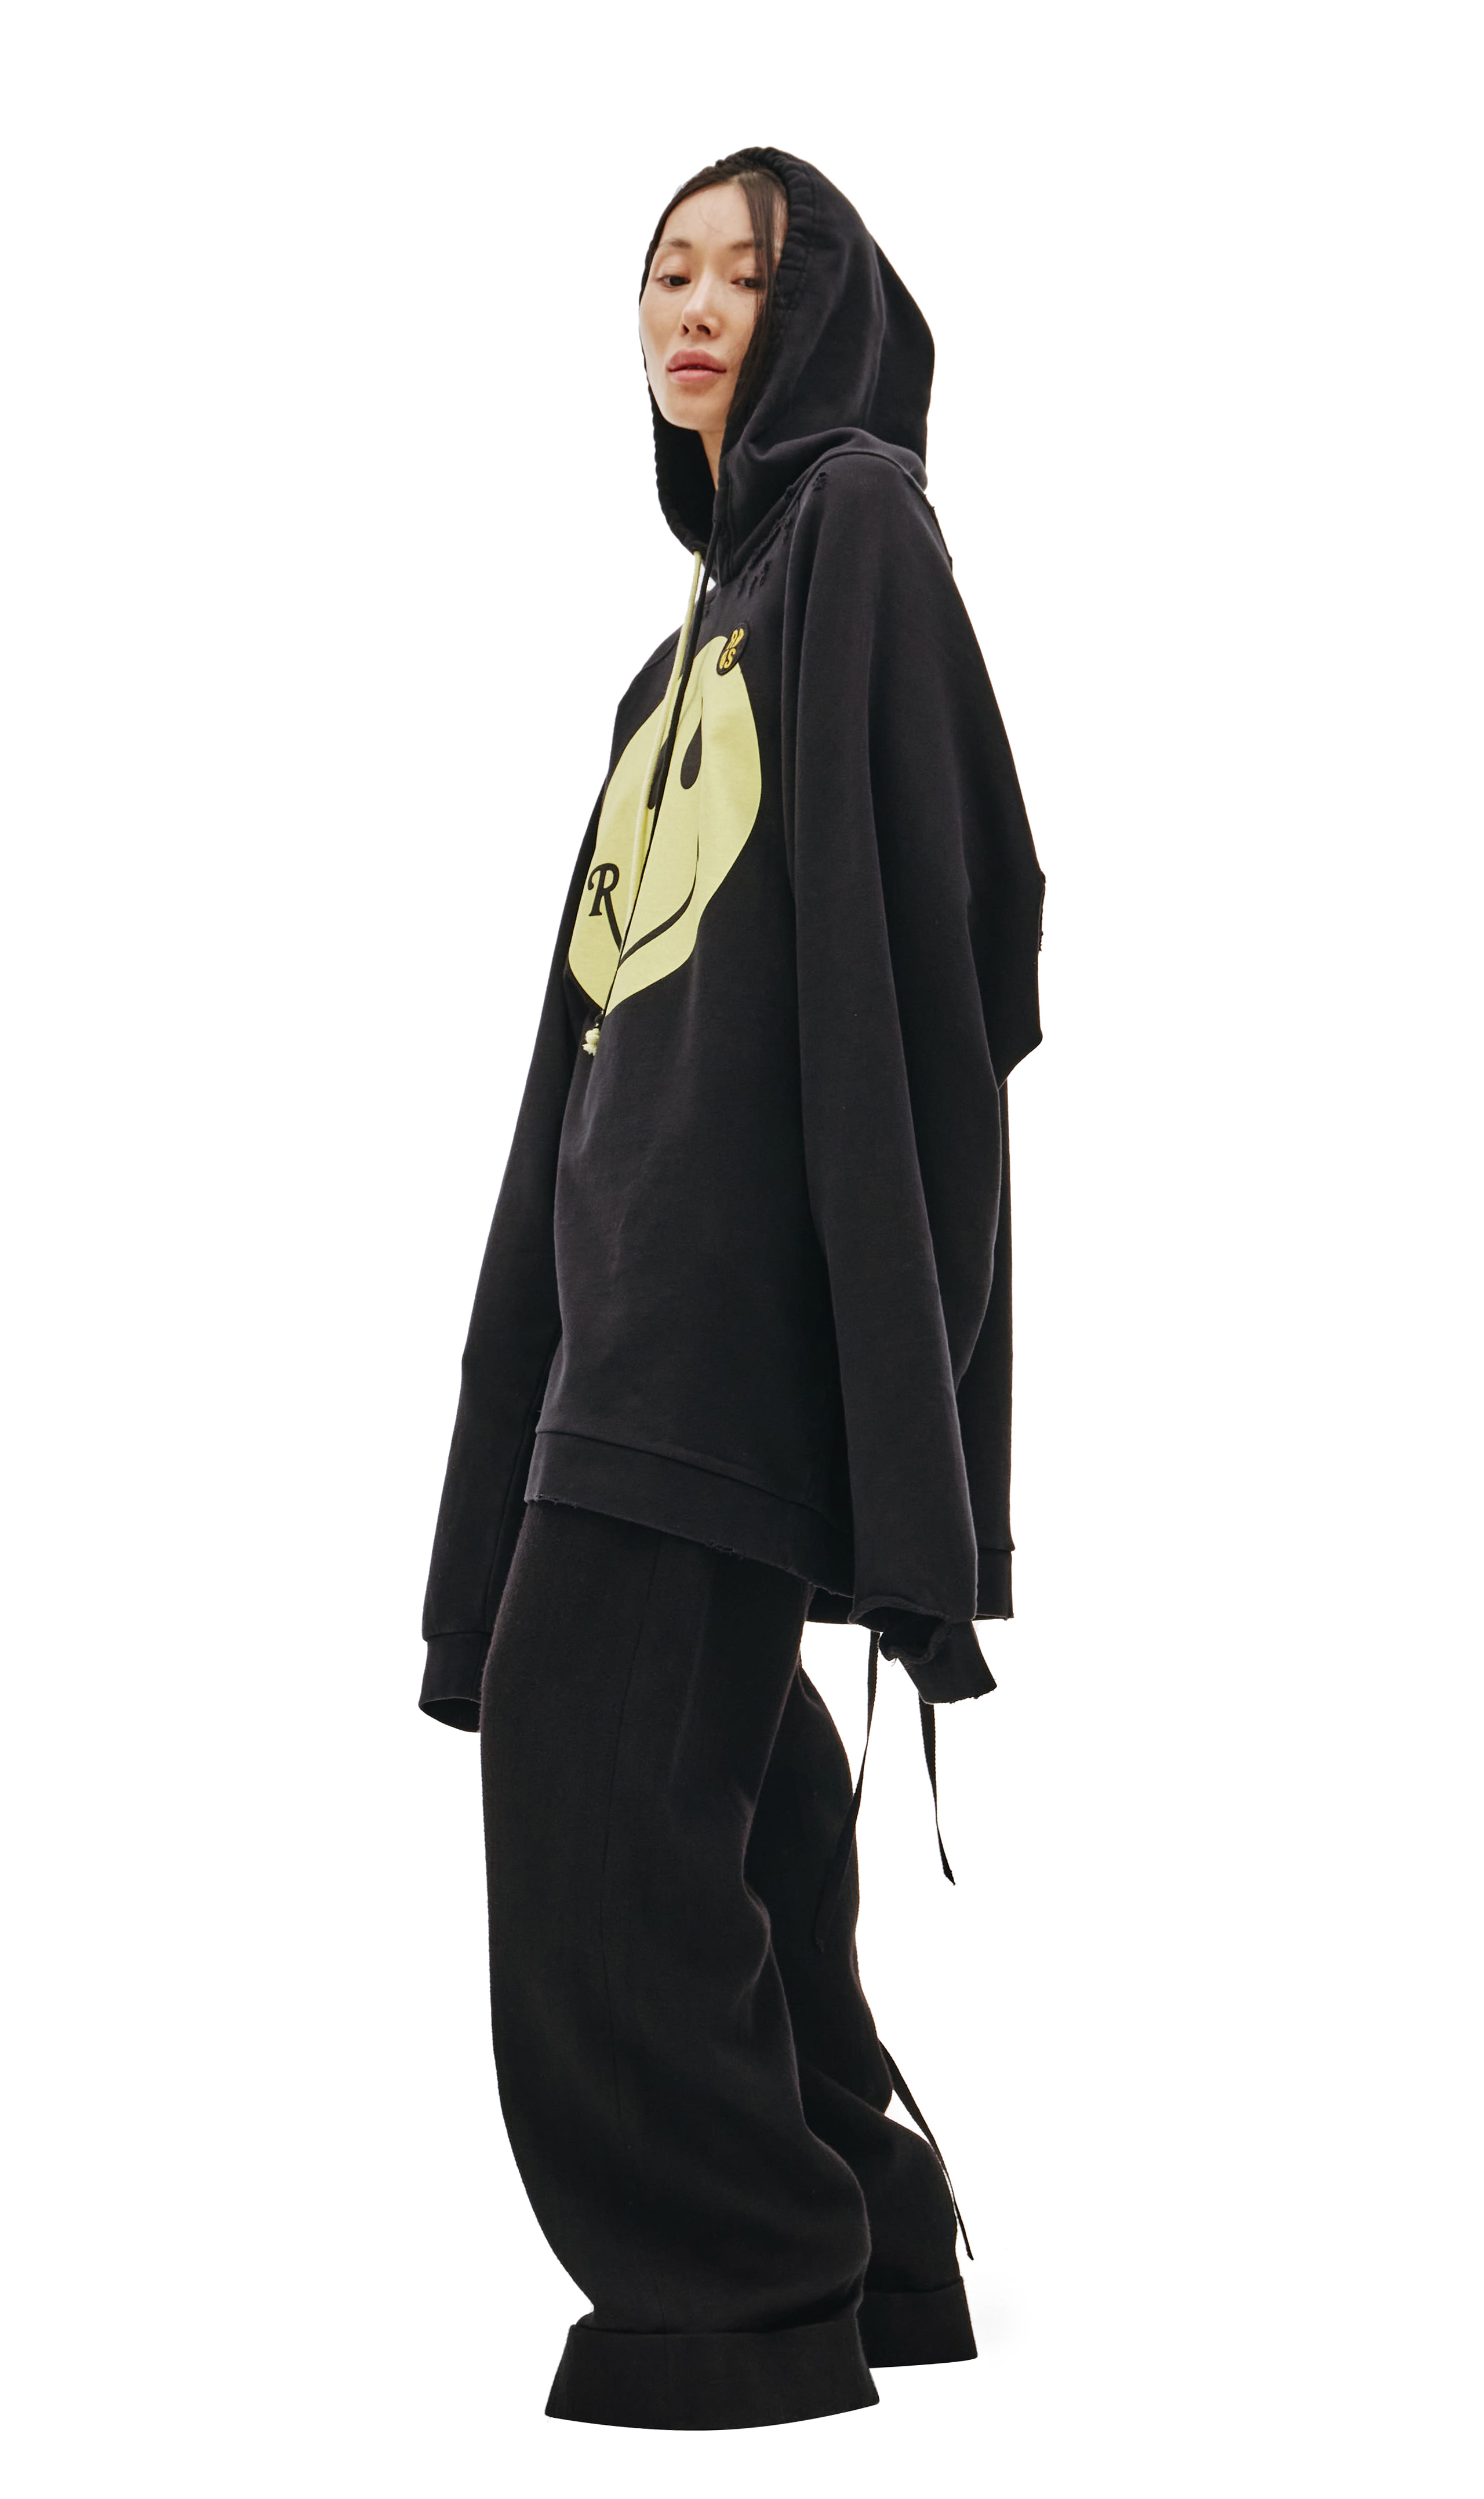 Shop Raf Simons hoodies for women online at SV77